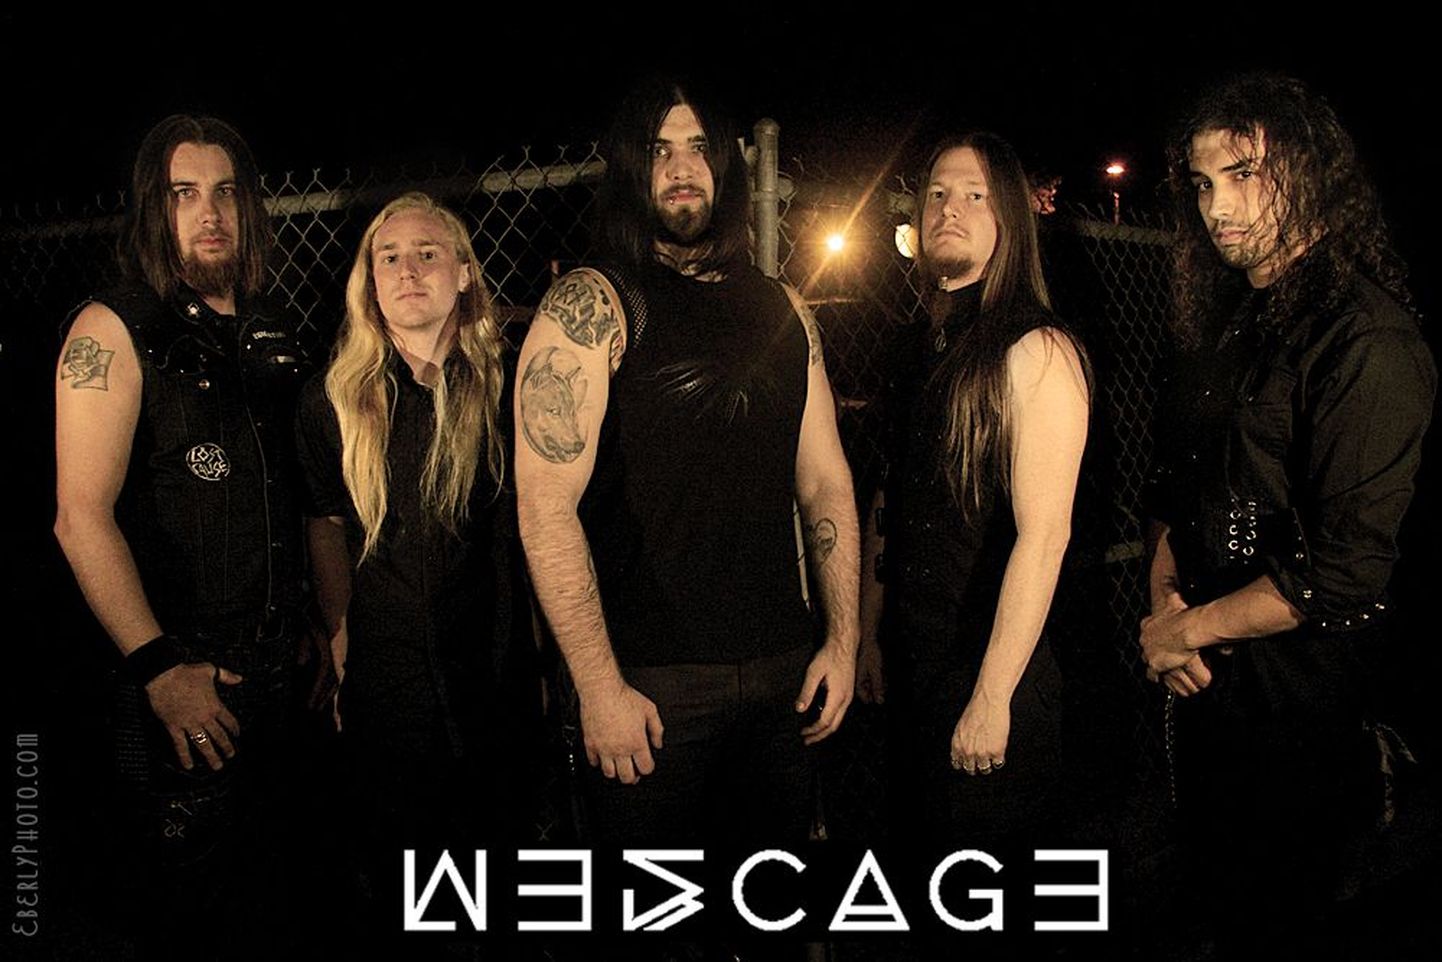 Brad Jurjens ansamblis Nicolas Cage'i poja bändis Wescage